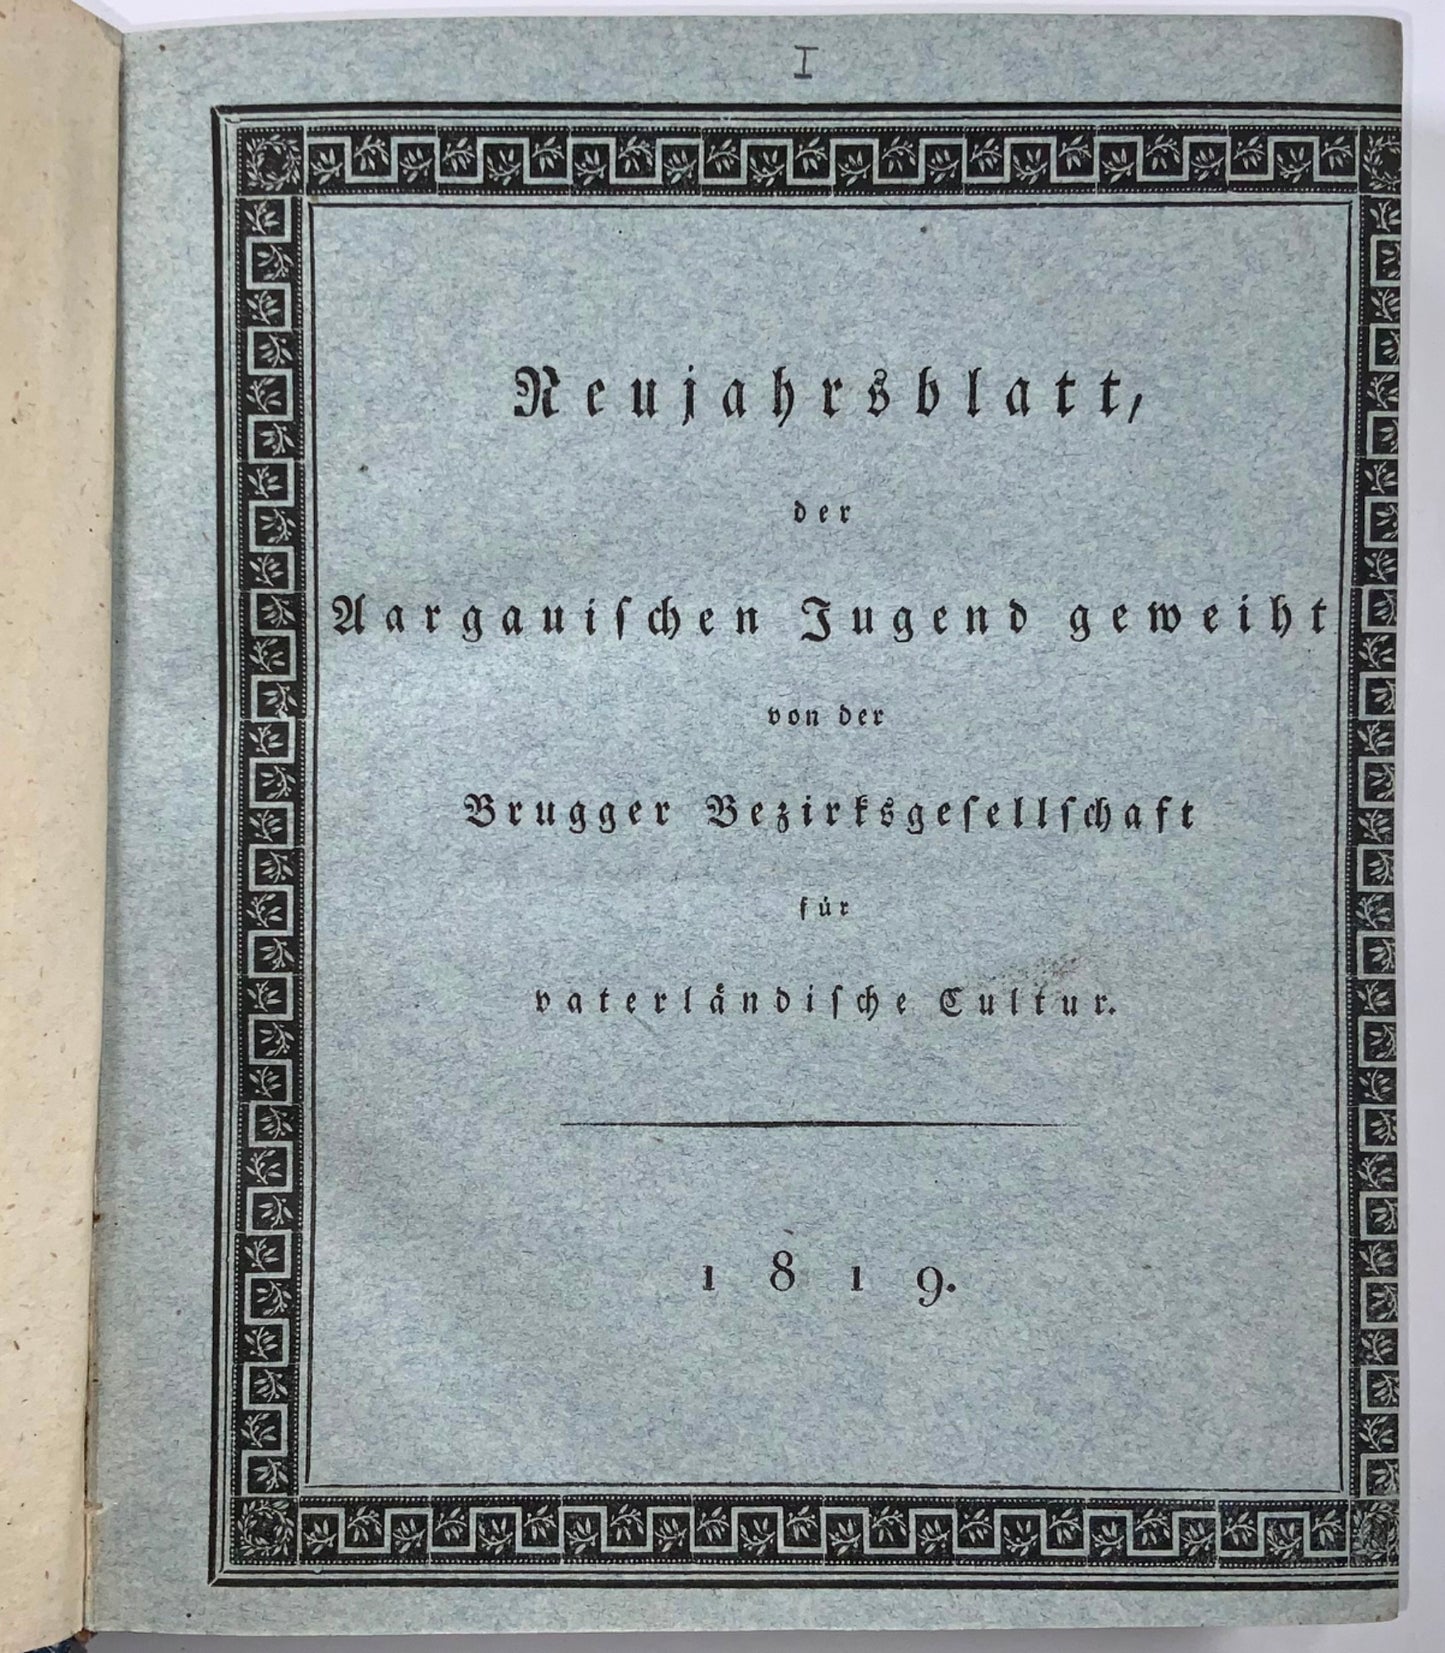 1819-29 Neujahrsblatt per Argovia, Svizzera, serie completa, illustrato